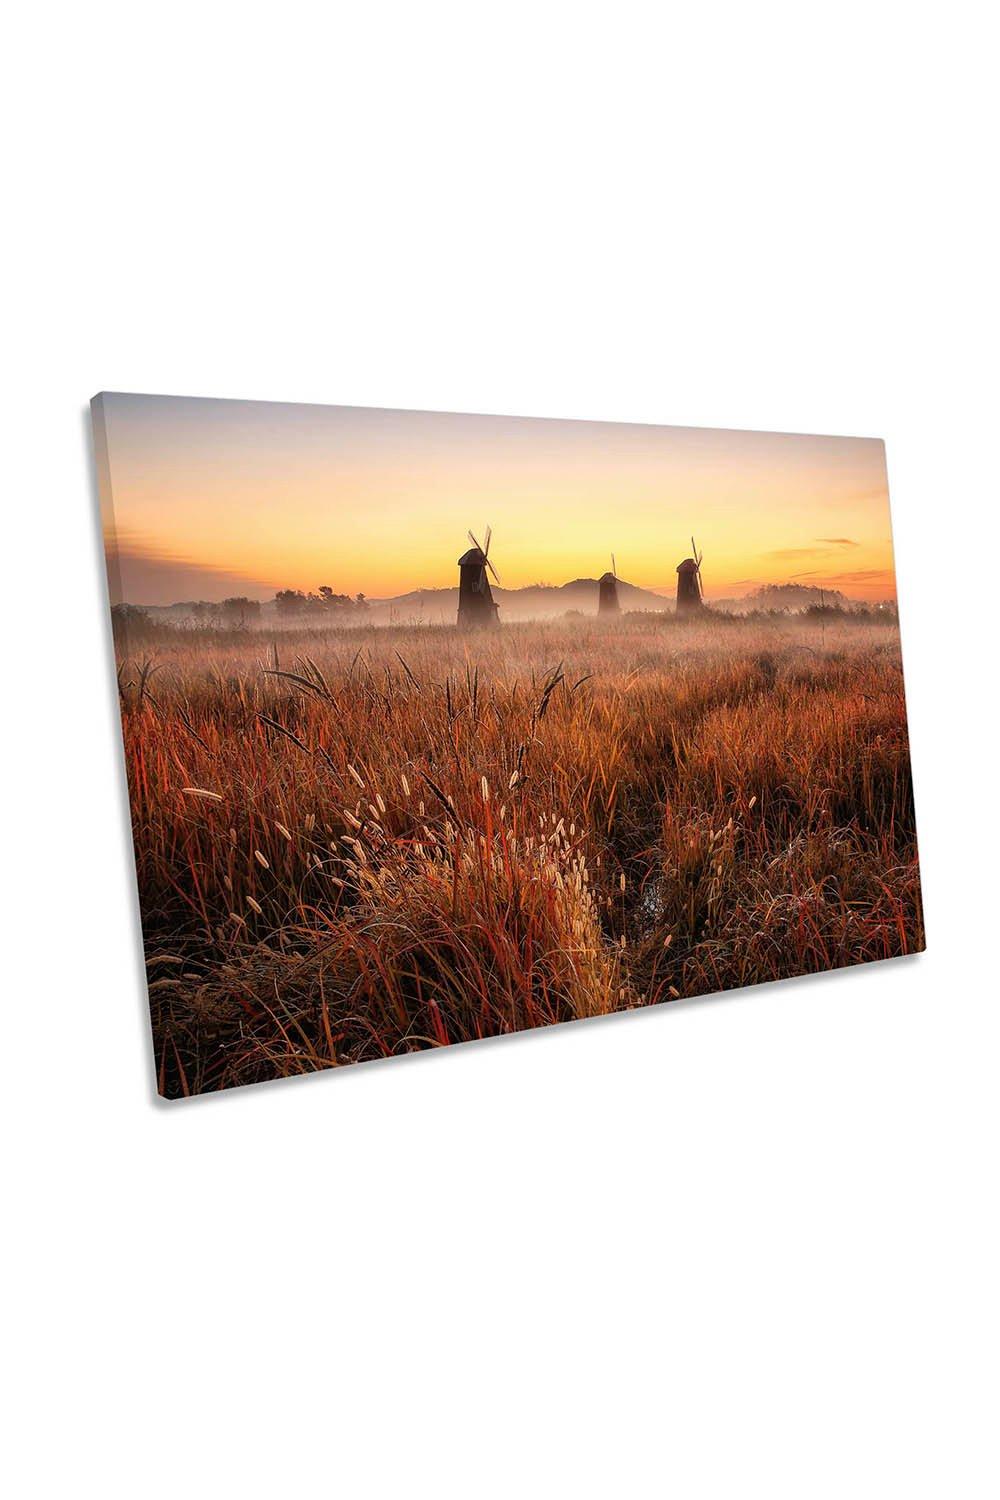 Autumn Morning Windmills Sunset Canvas Wall Art Picture Print